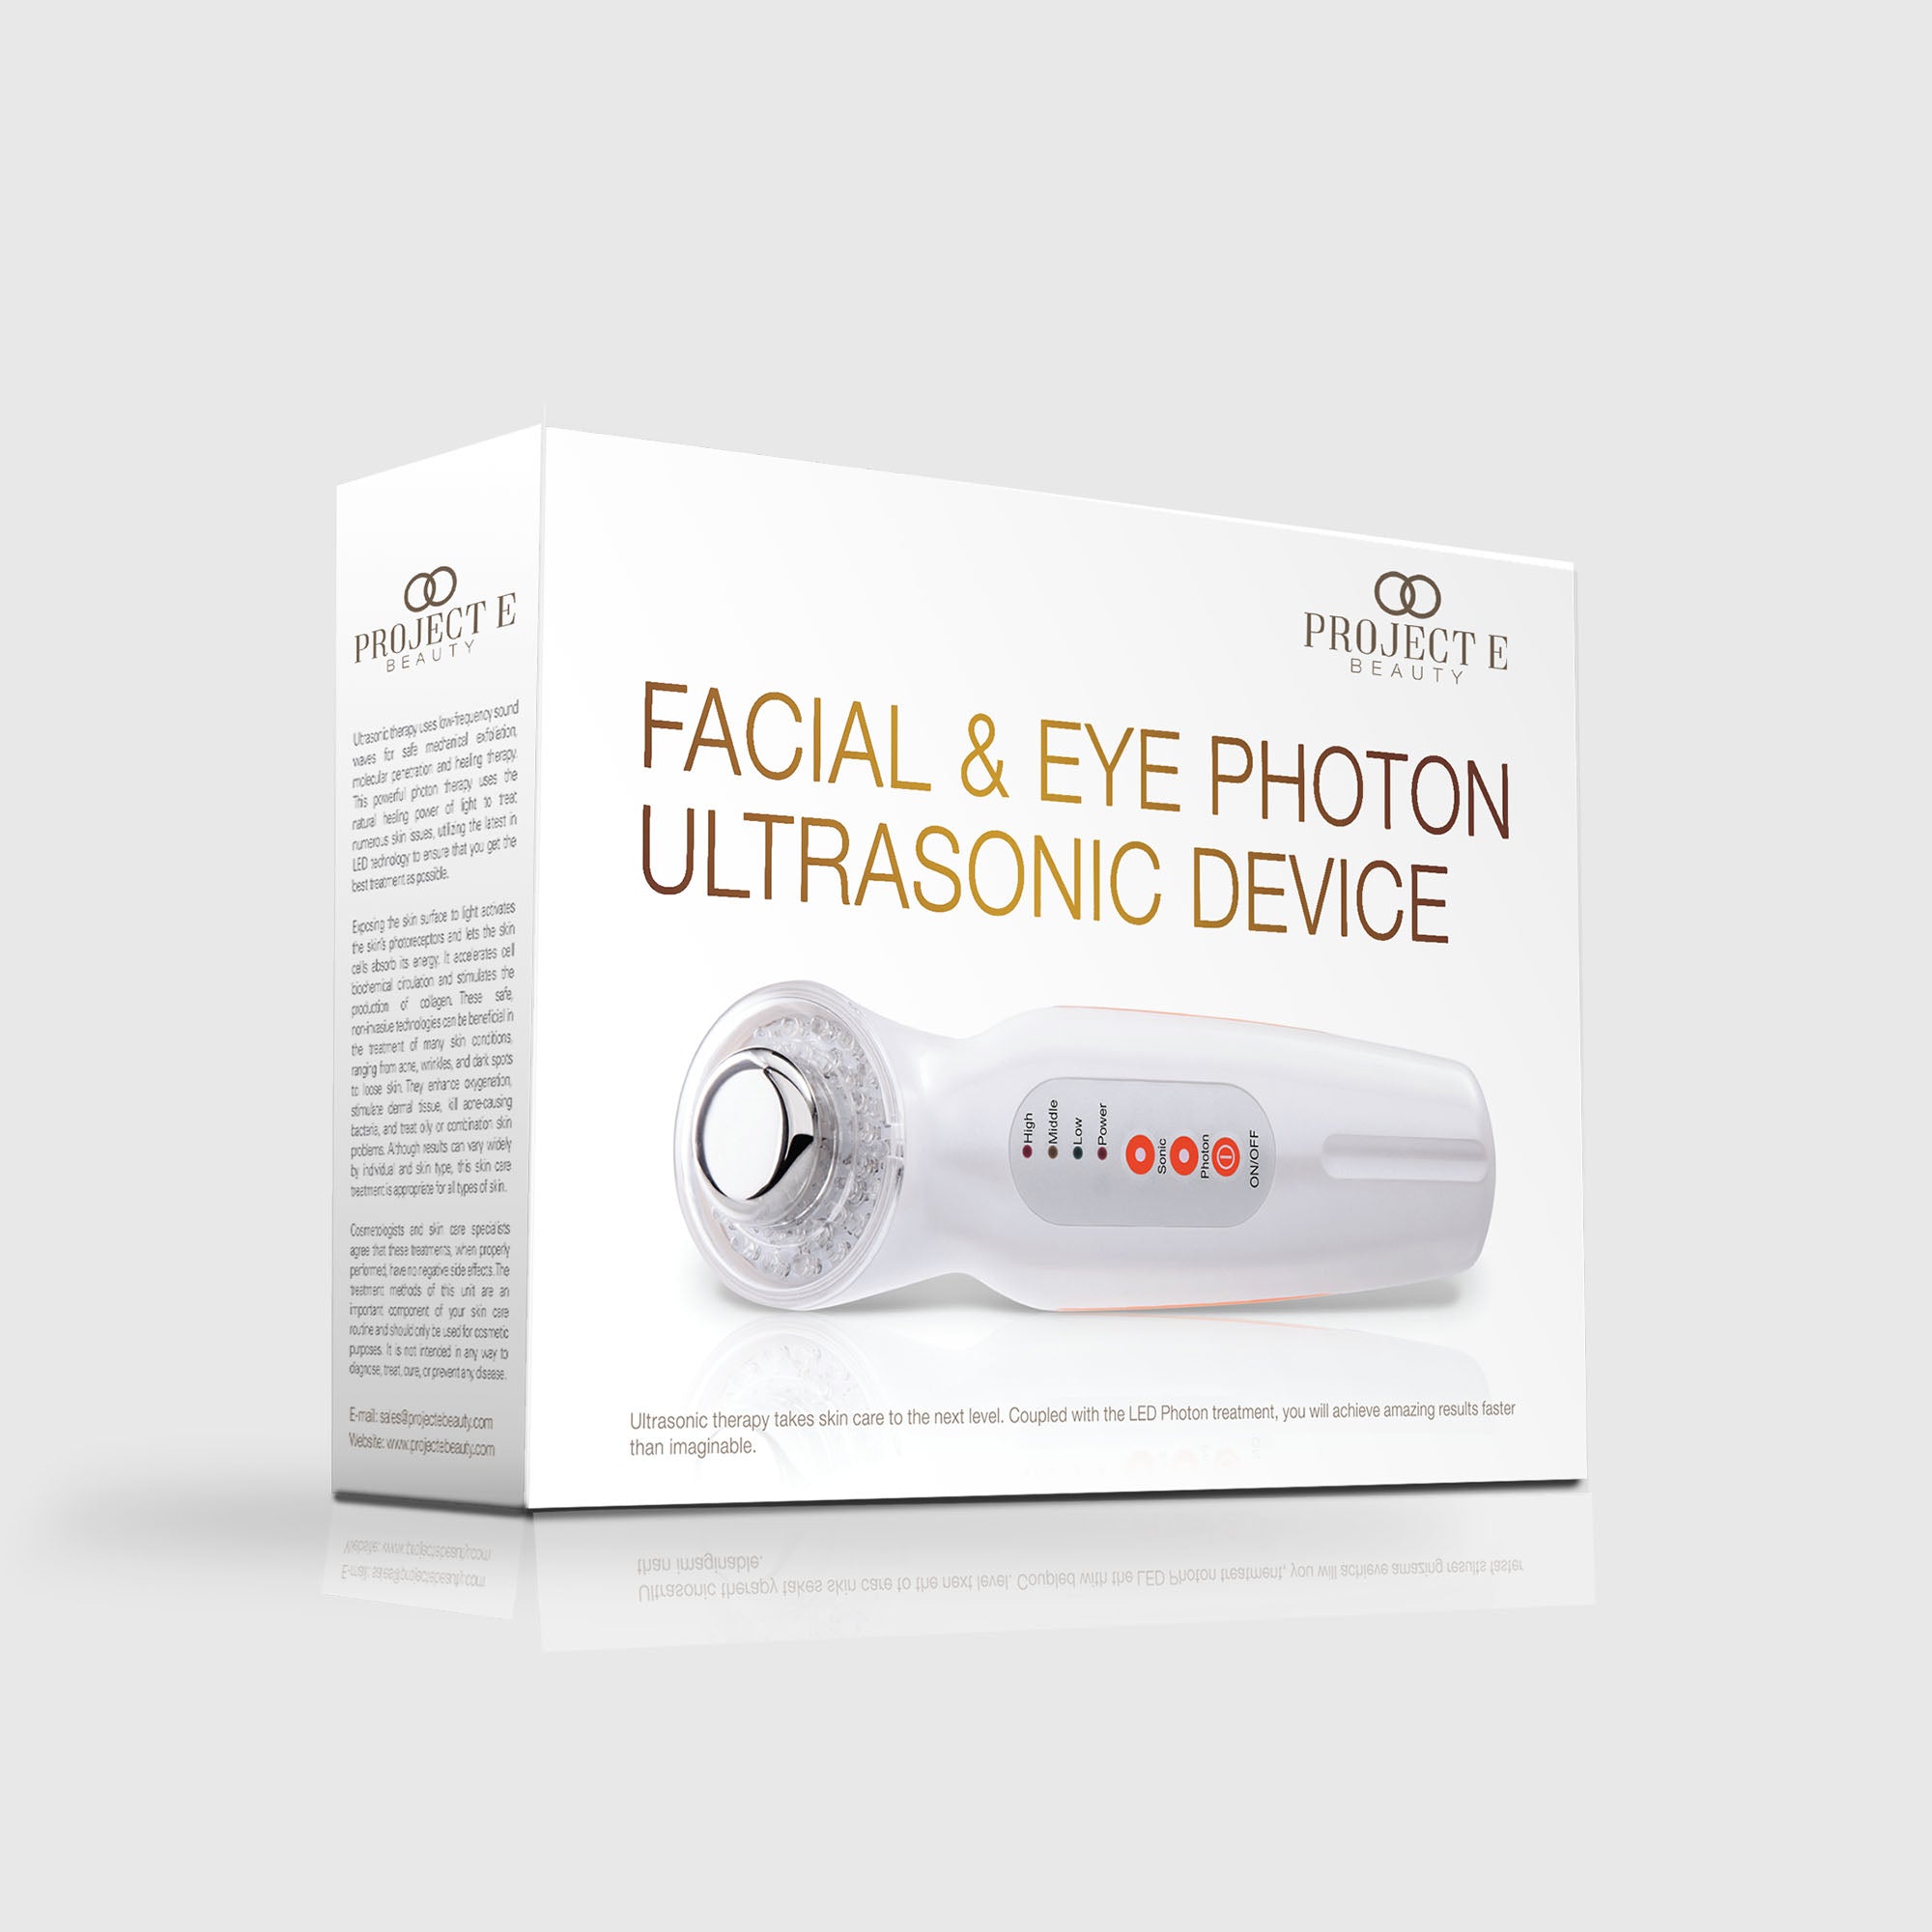 Facial & Eye Photon Ultrasonic Device